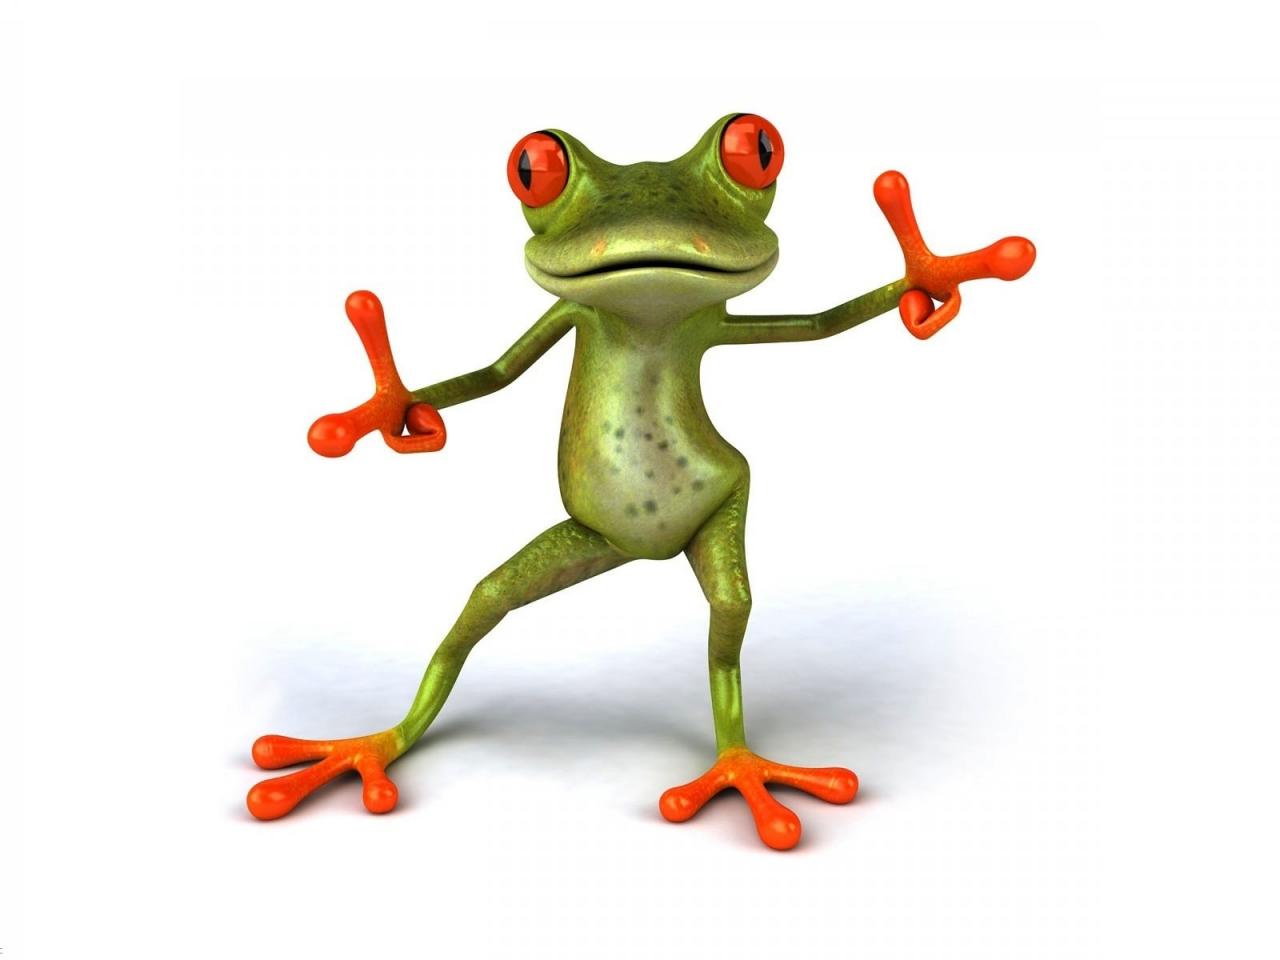 Wallpapers Frog Cute Dance Cool Motion Hi 1280x960 56467 frog cute